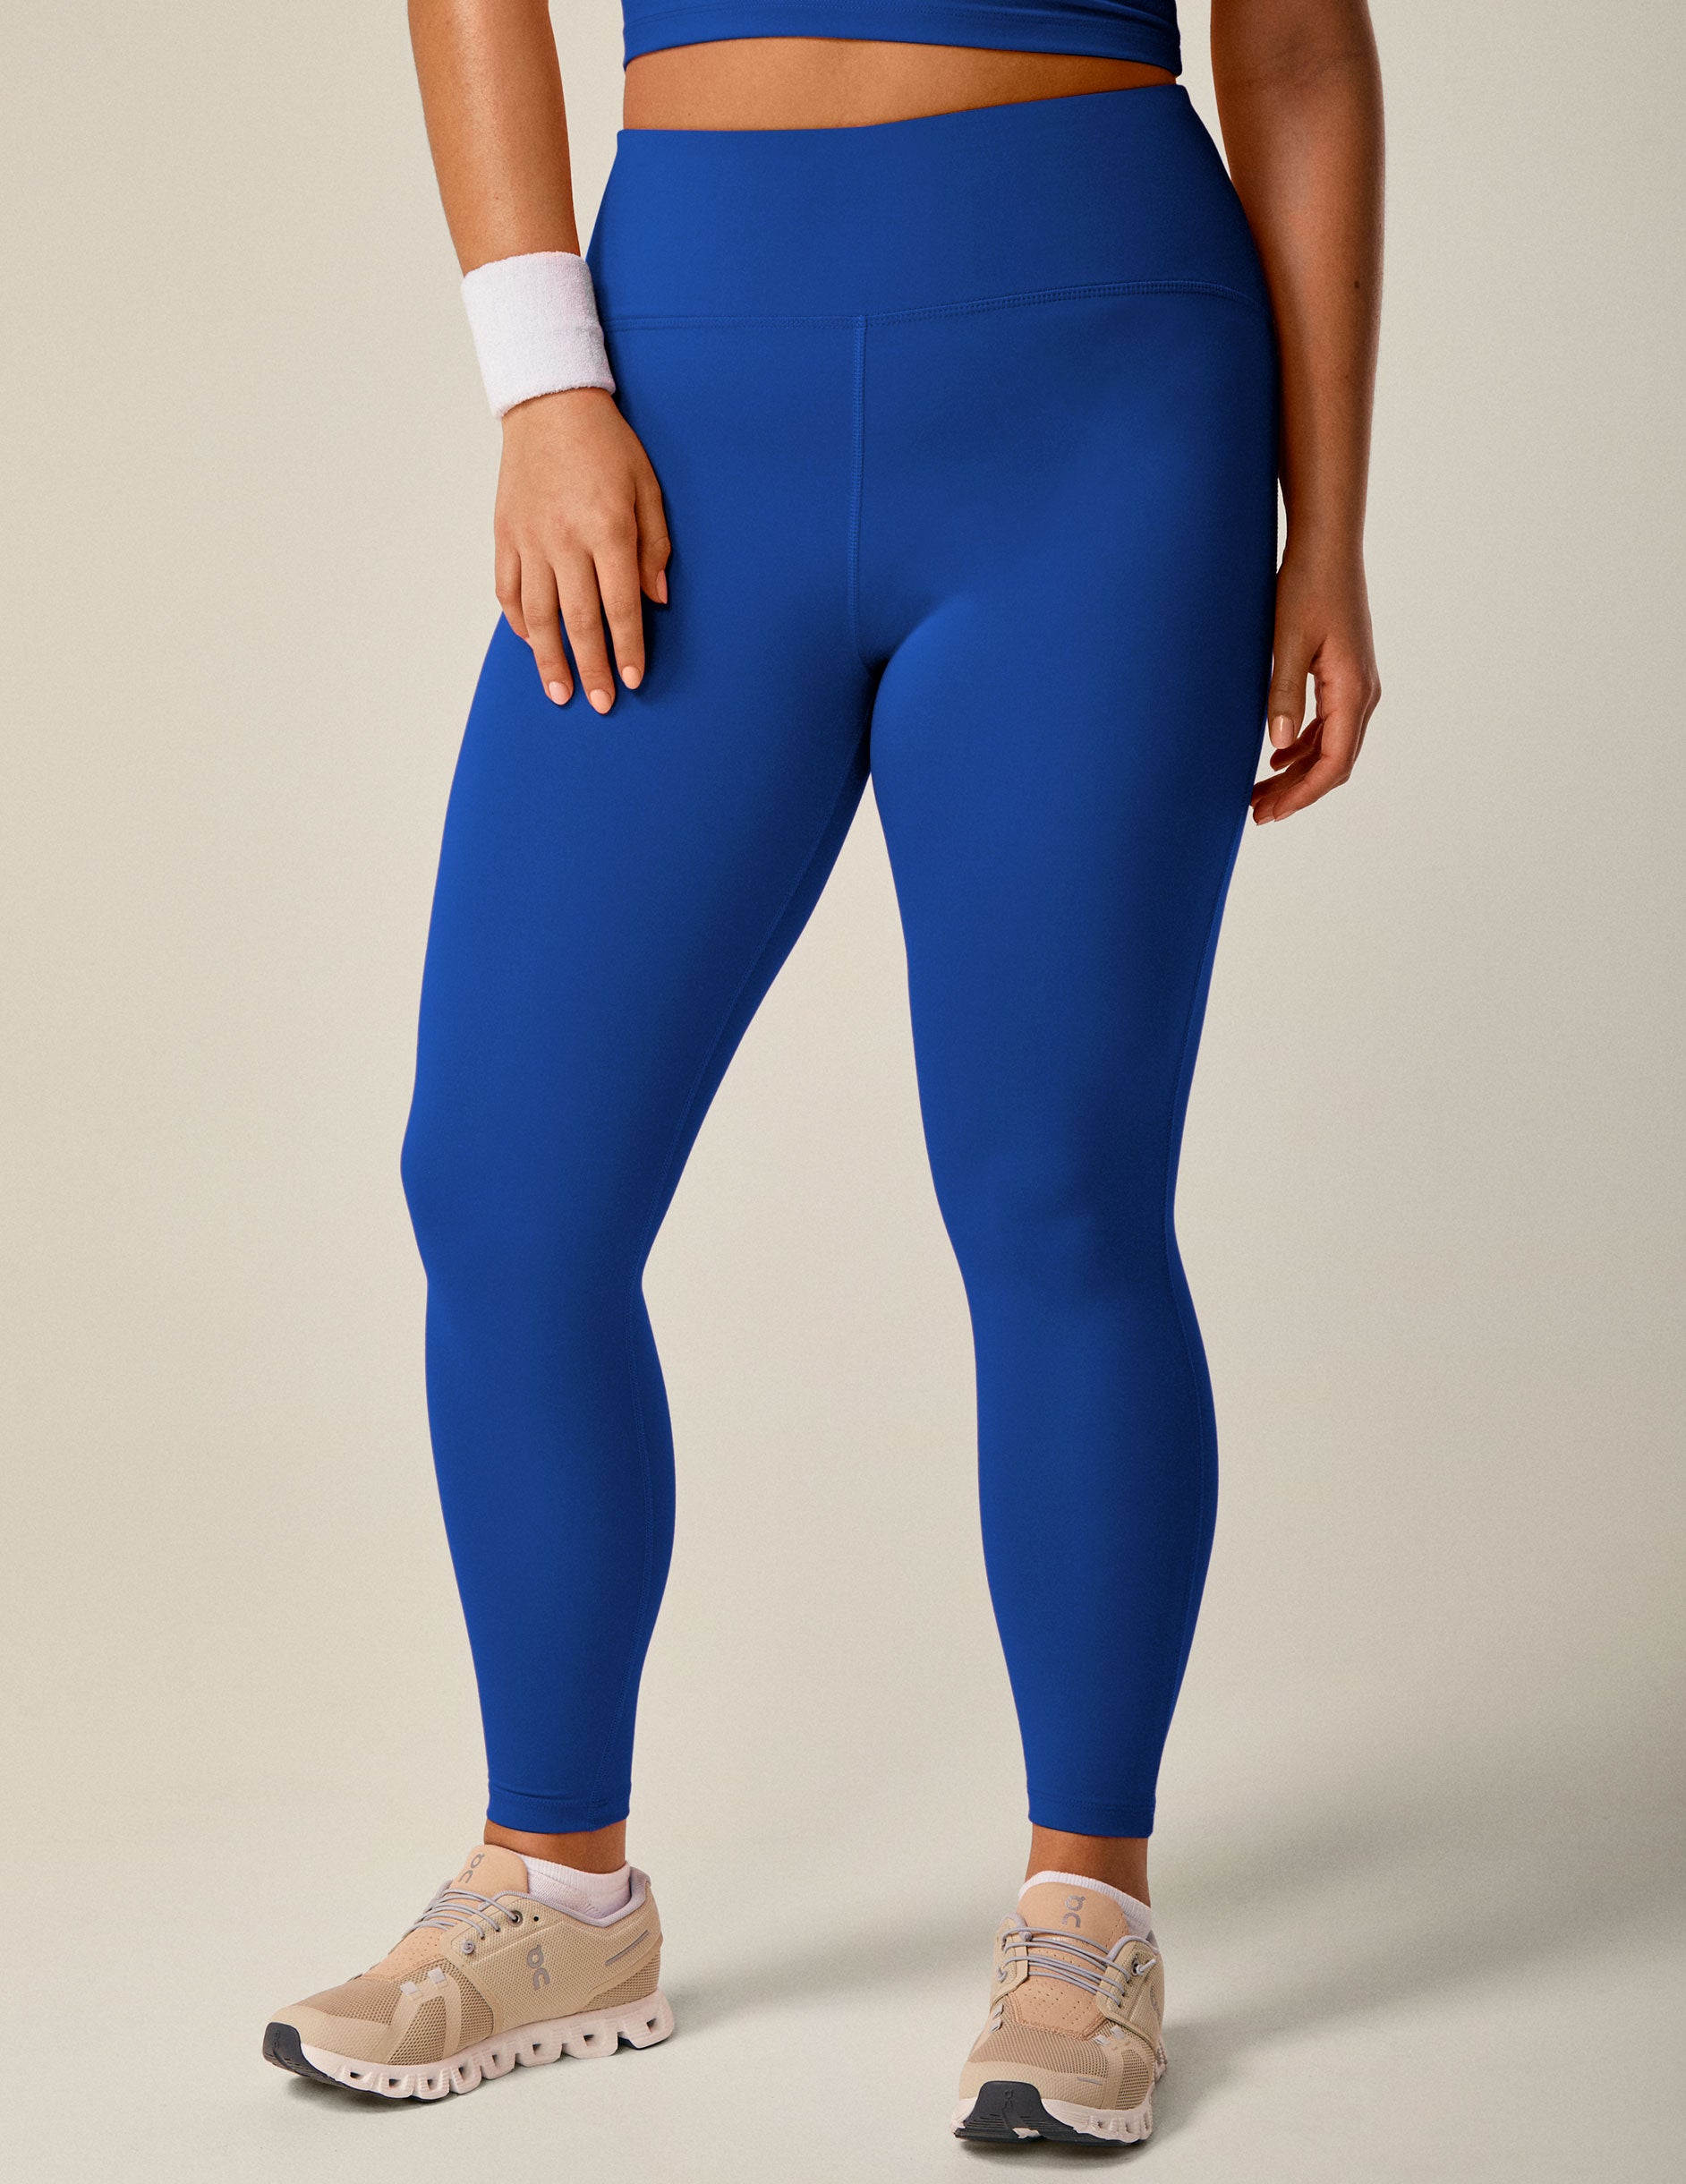 blue 4" high-waisted midi PowerBeyond leggings. 